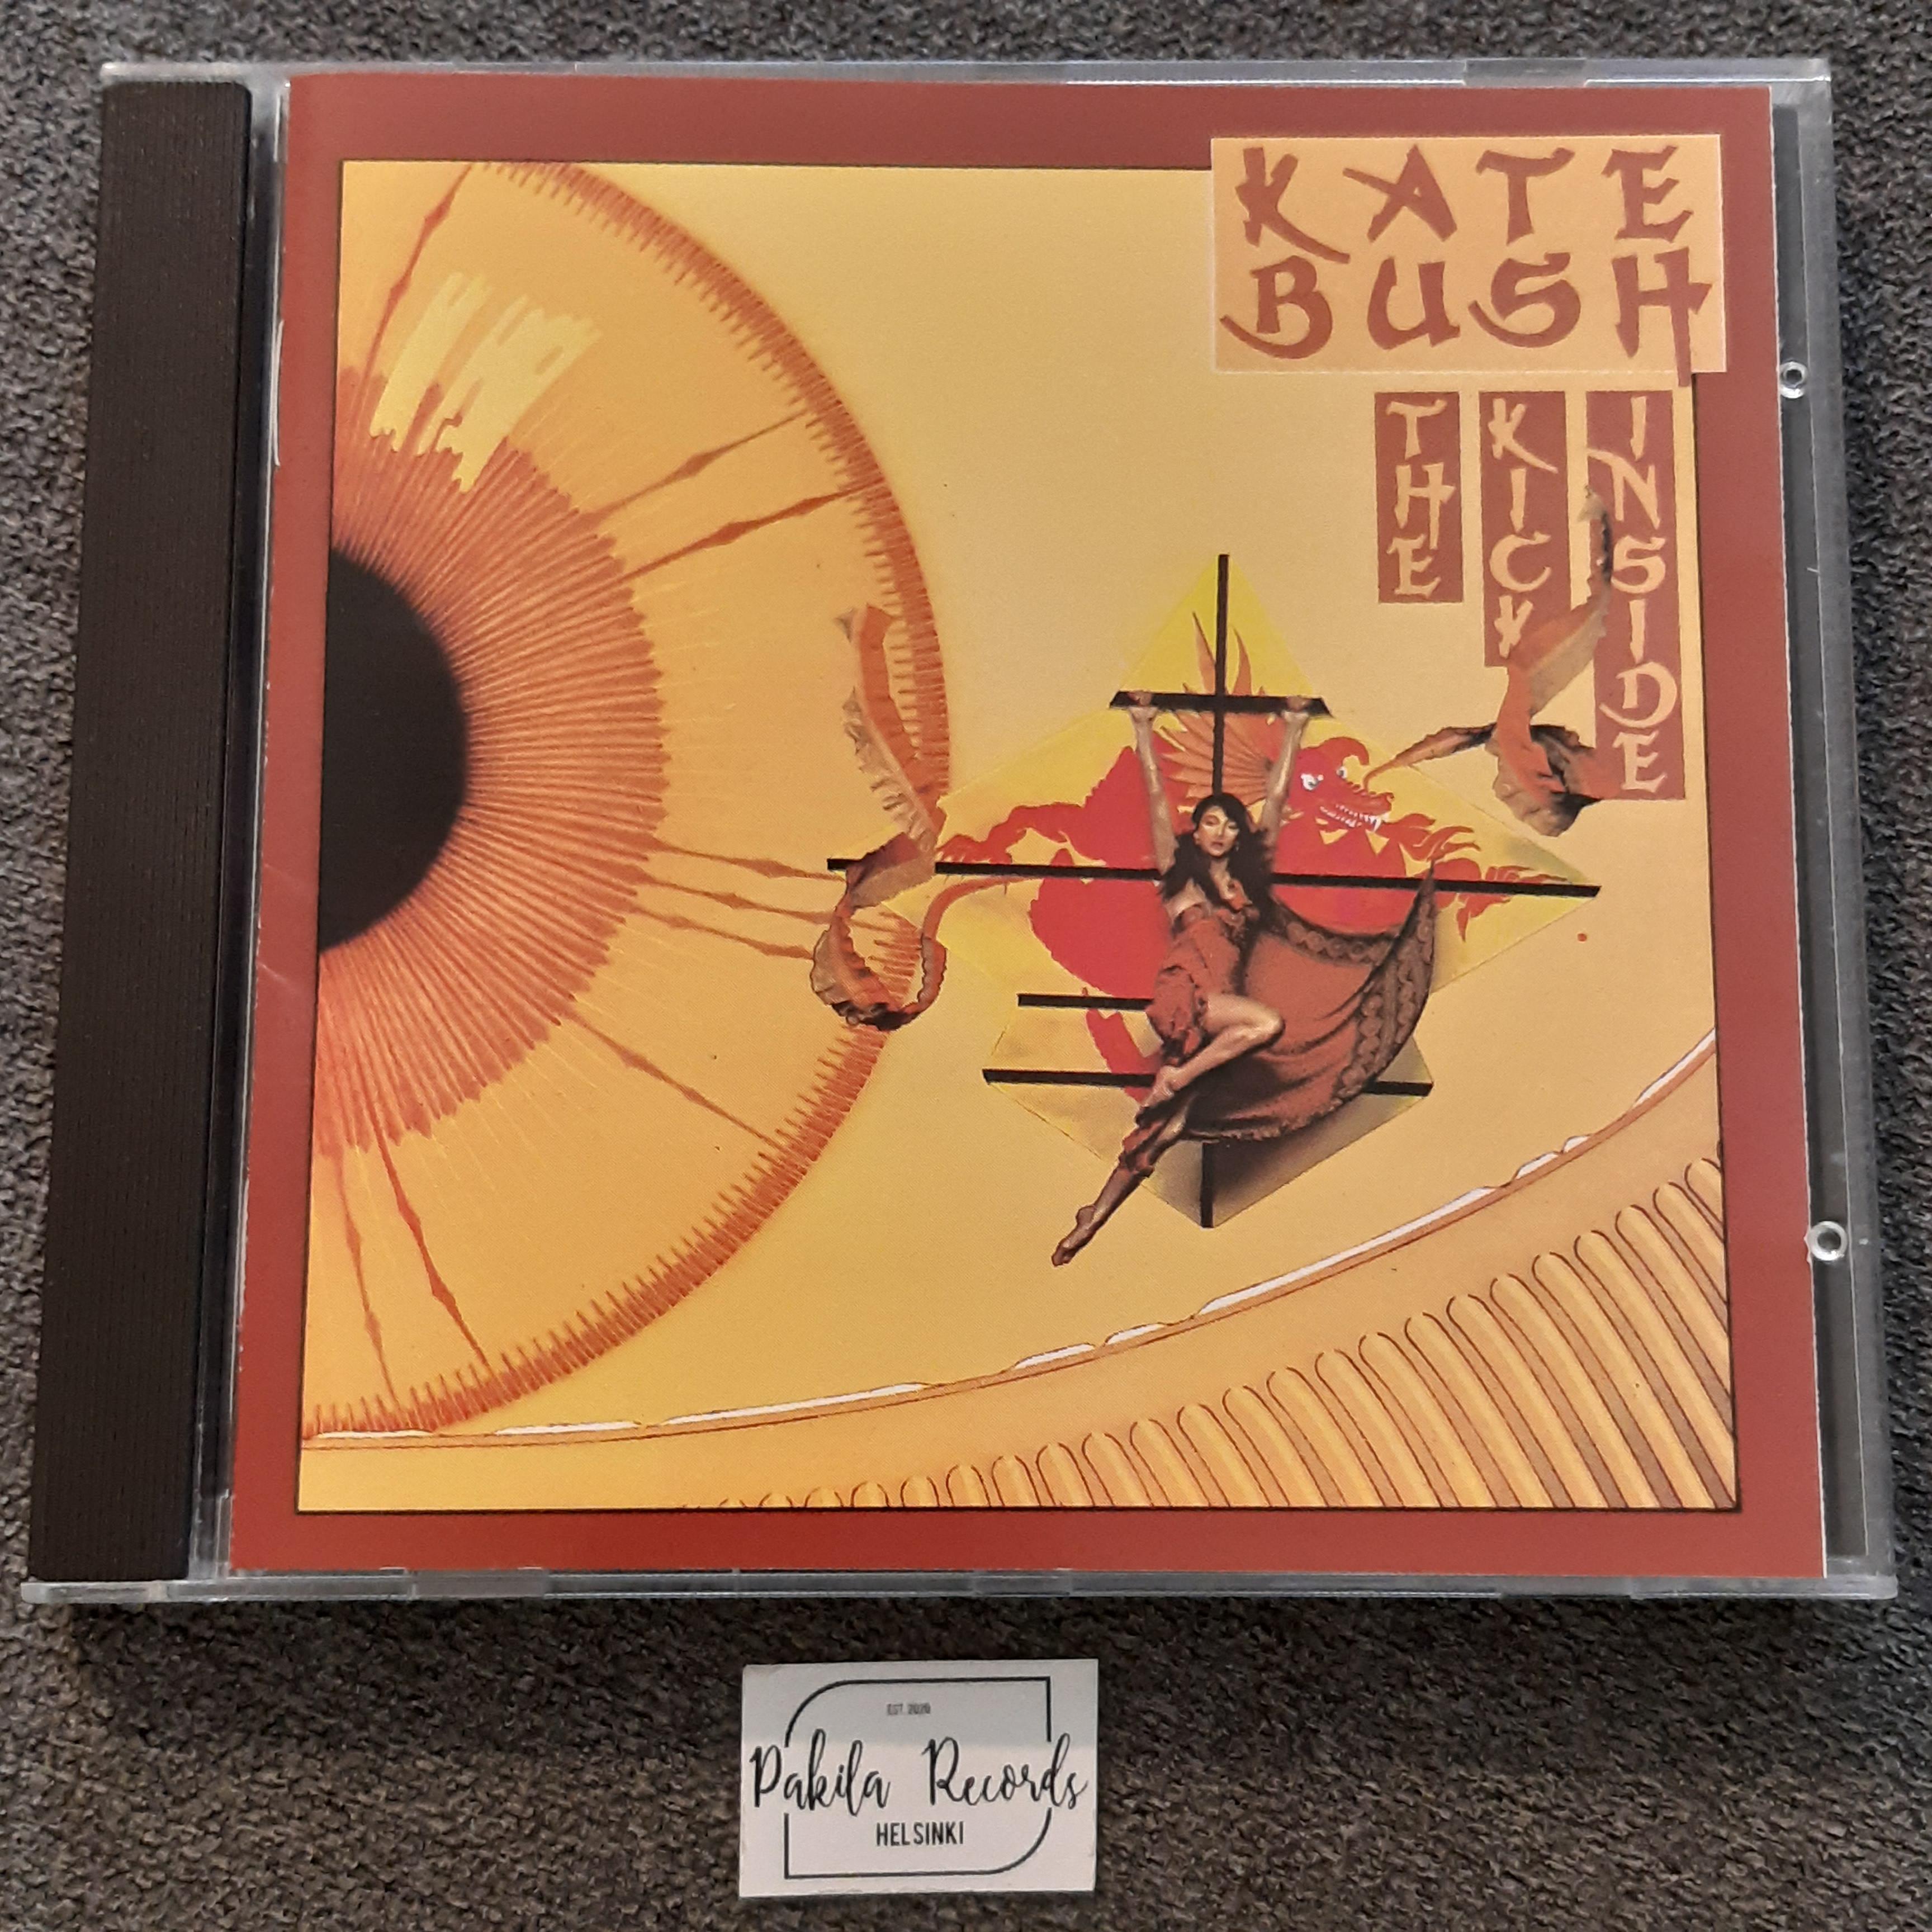 Kate Bush - The Kick Inside - CD (käytetty)